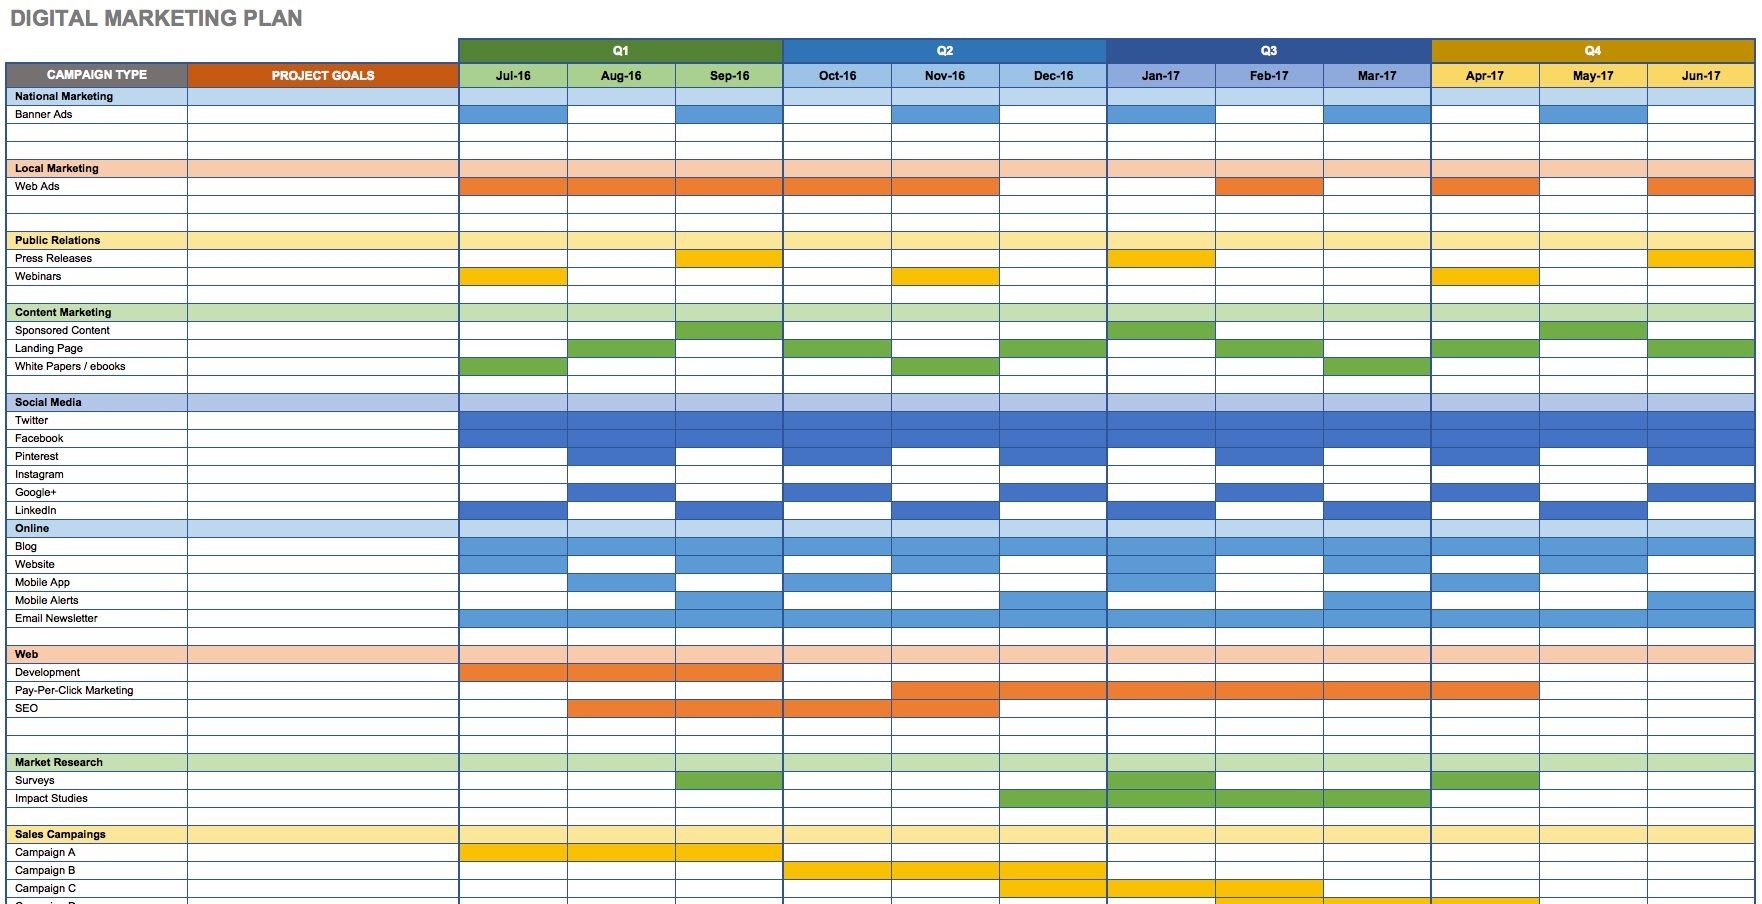 Digital Marketing Plan In Excel | Digital Marketing Strategy Marketing Calendar Template Xls